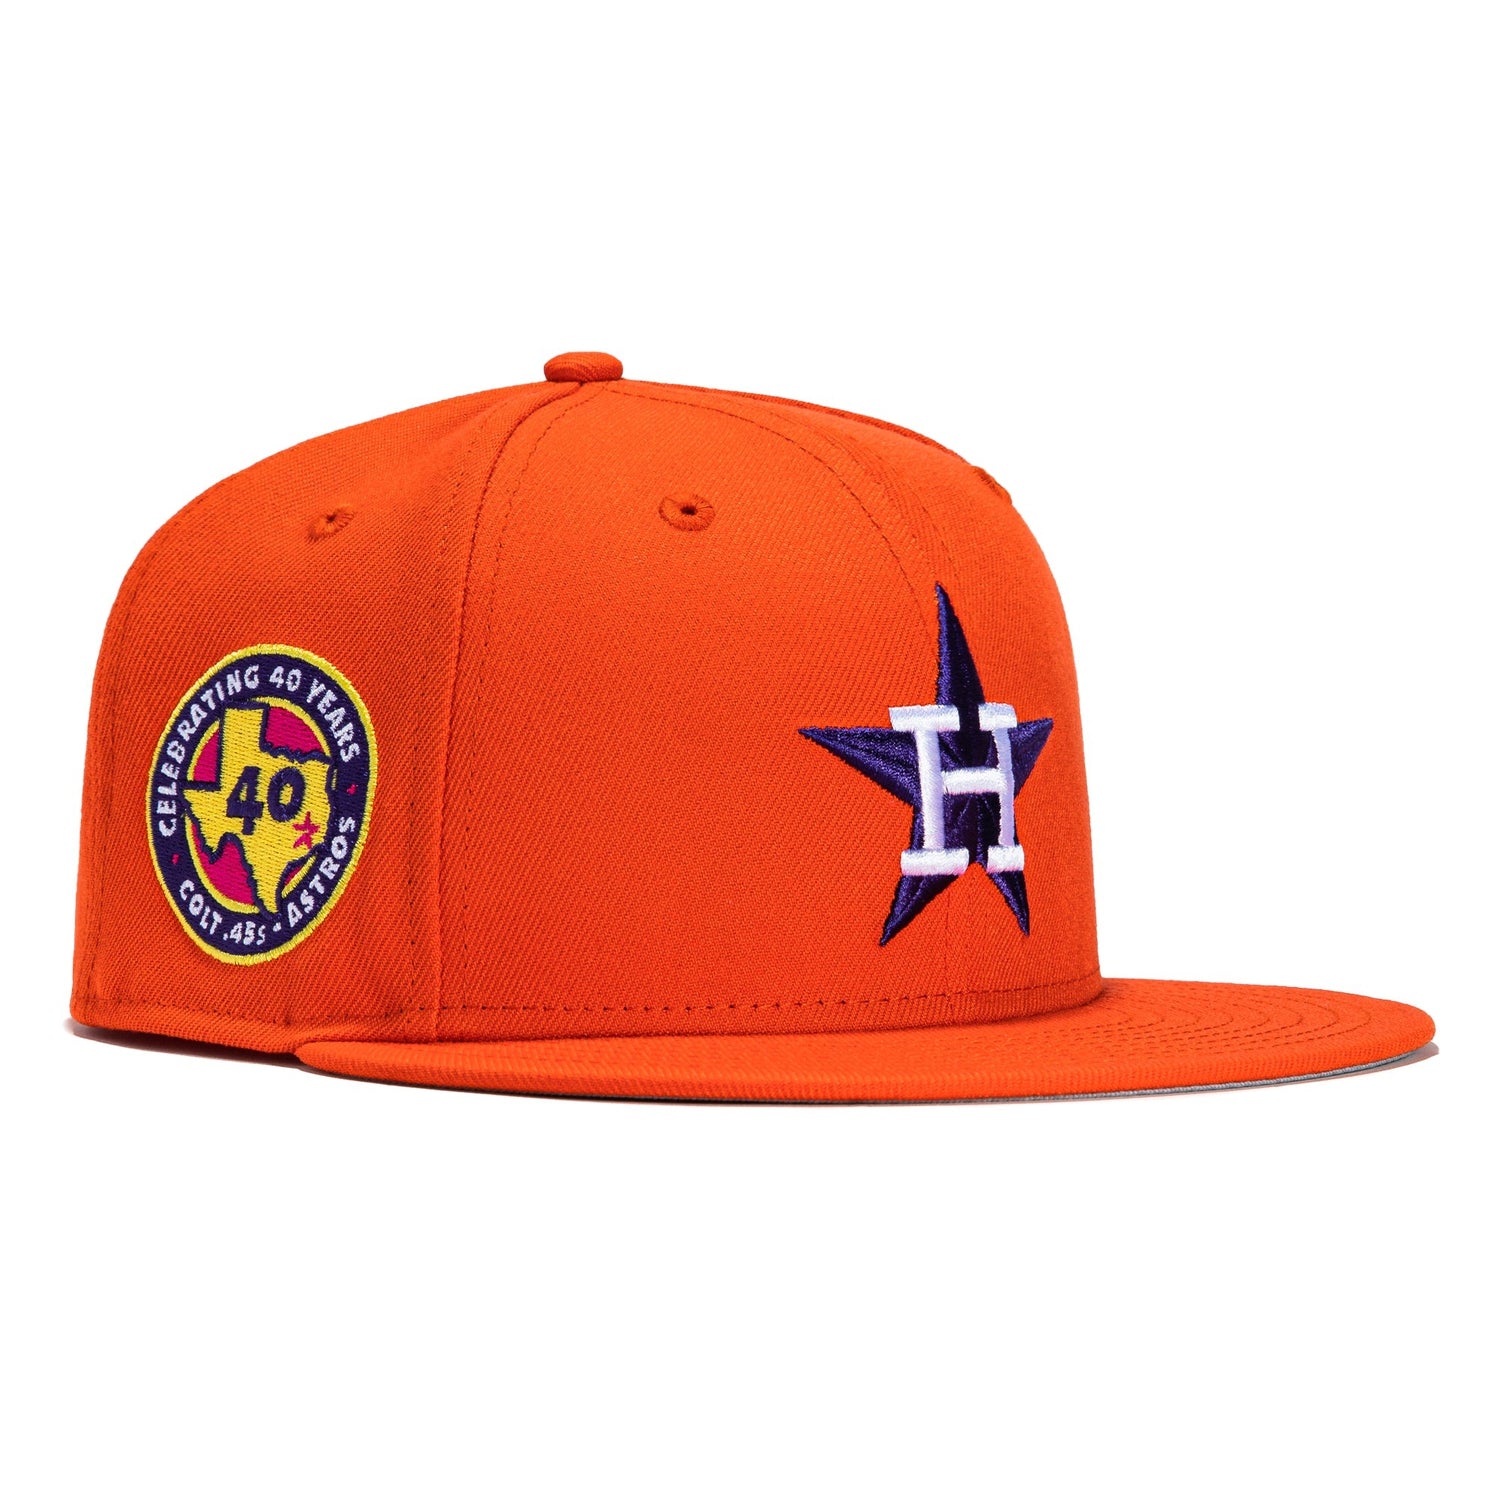 Throwback Astros Old School Classic Logo Orange & White Snapback Hat  Cap NEW